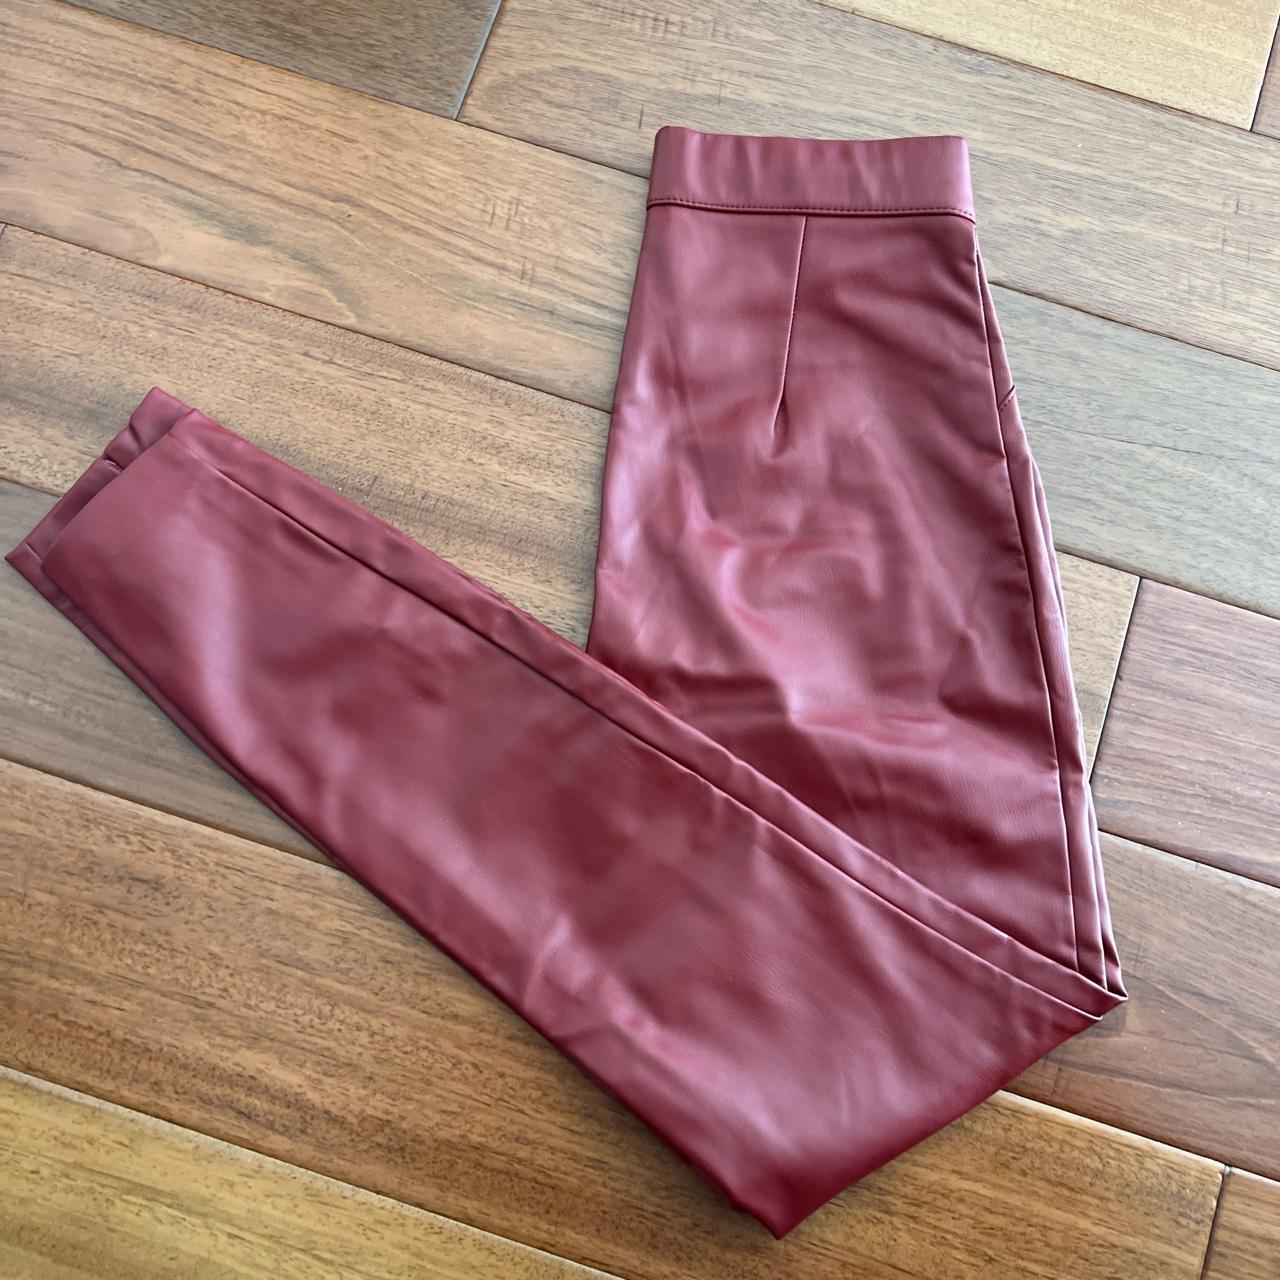 Leather Pants Chaps|high-waist Burgundy Leather Pants For Women - Wide Leg,  Pu, Autumn/winter